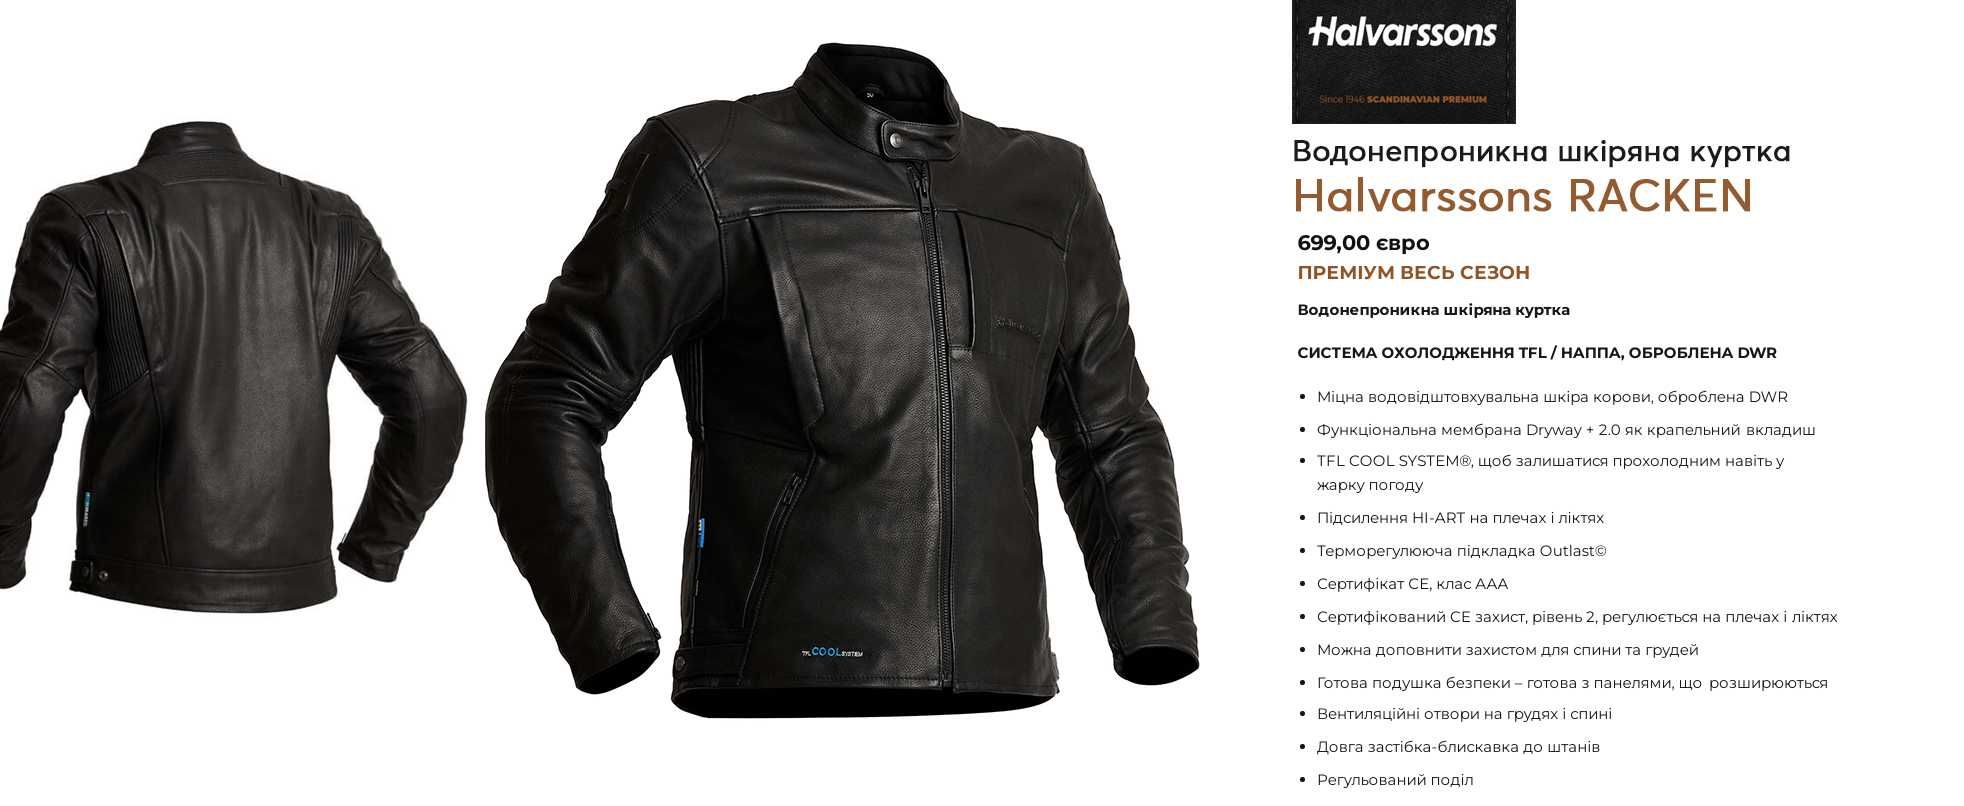 Halvarssons Racken мото куртка шкіра на мембрані р. 54 водонепроникна